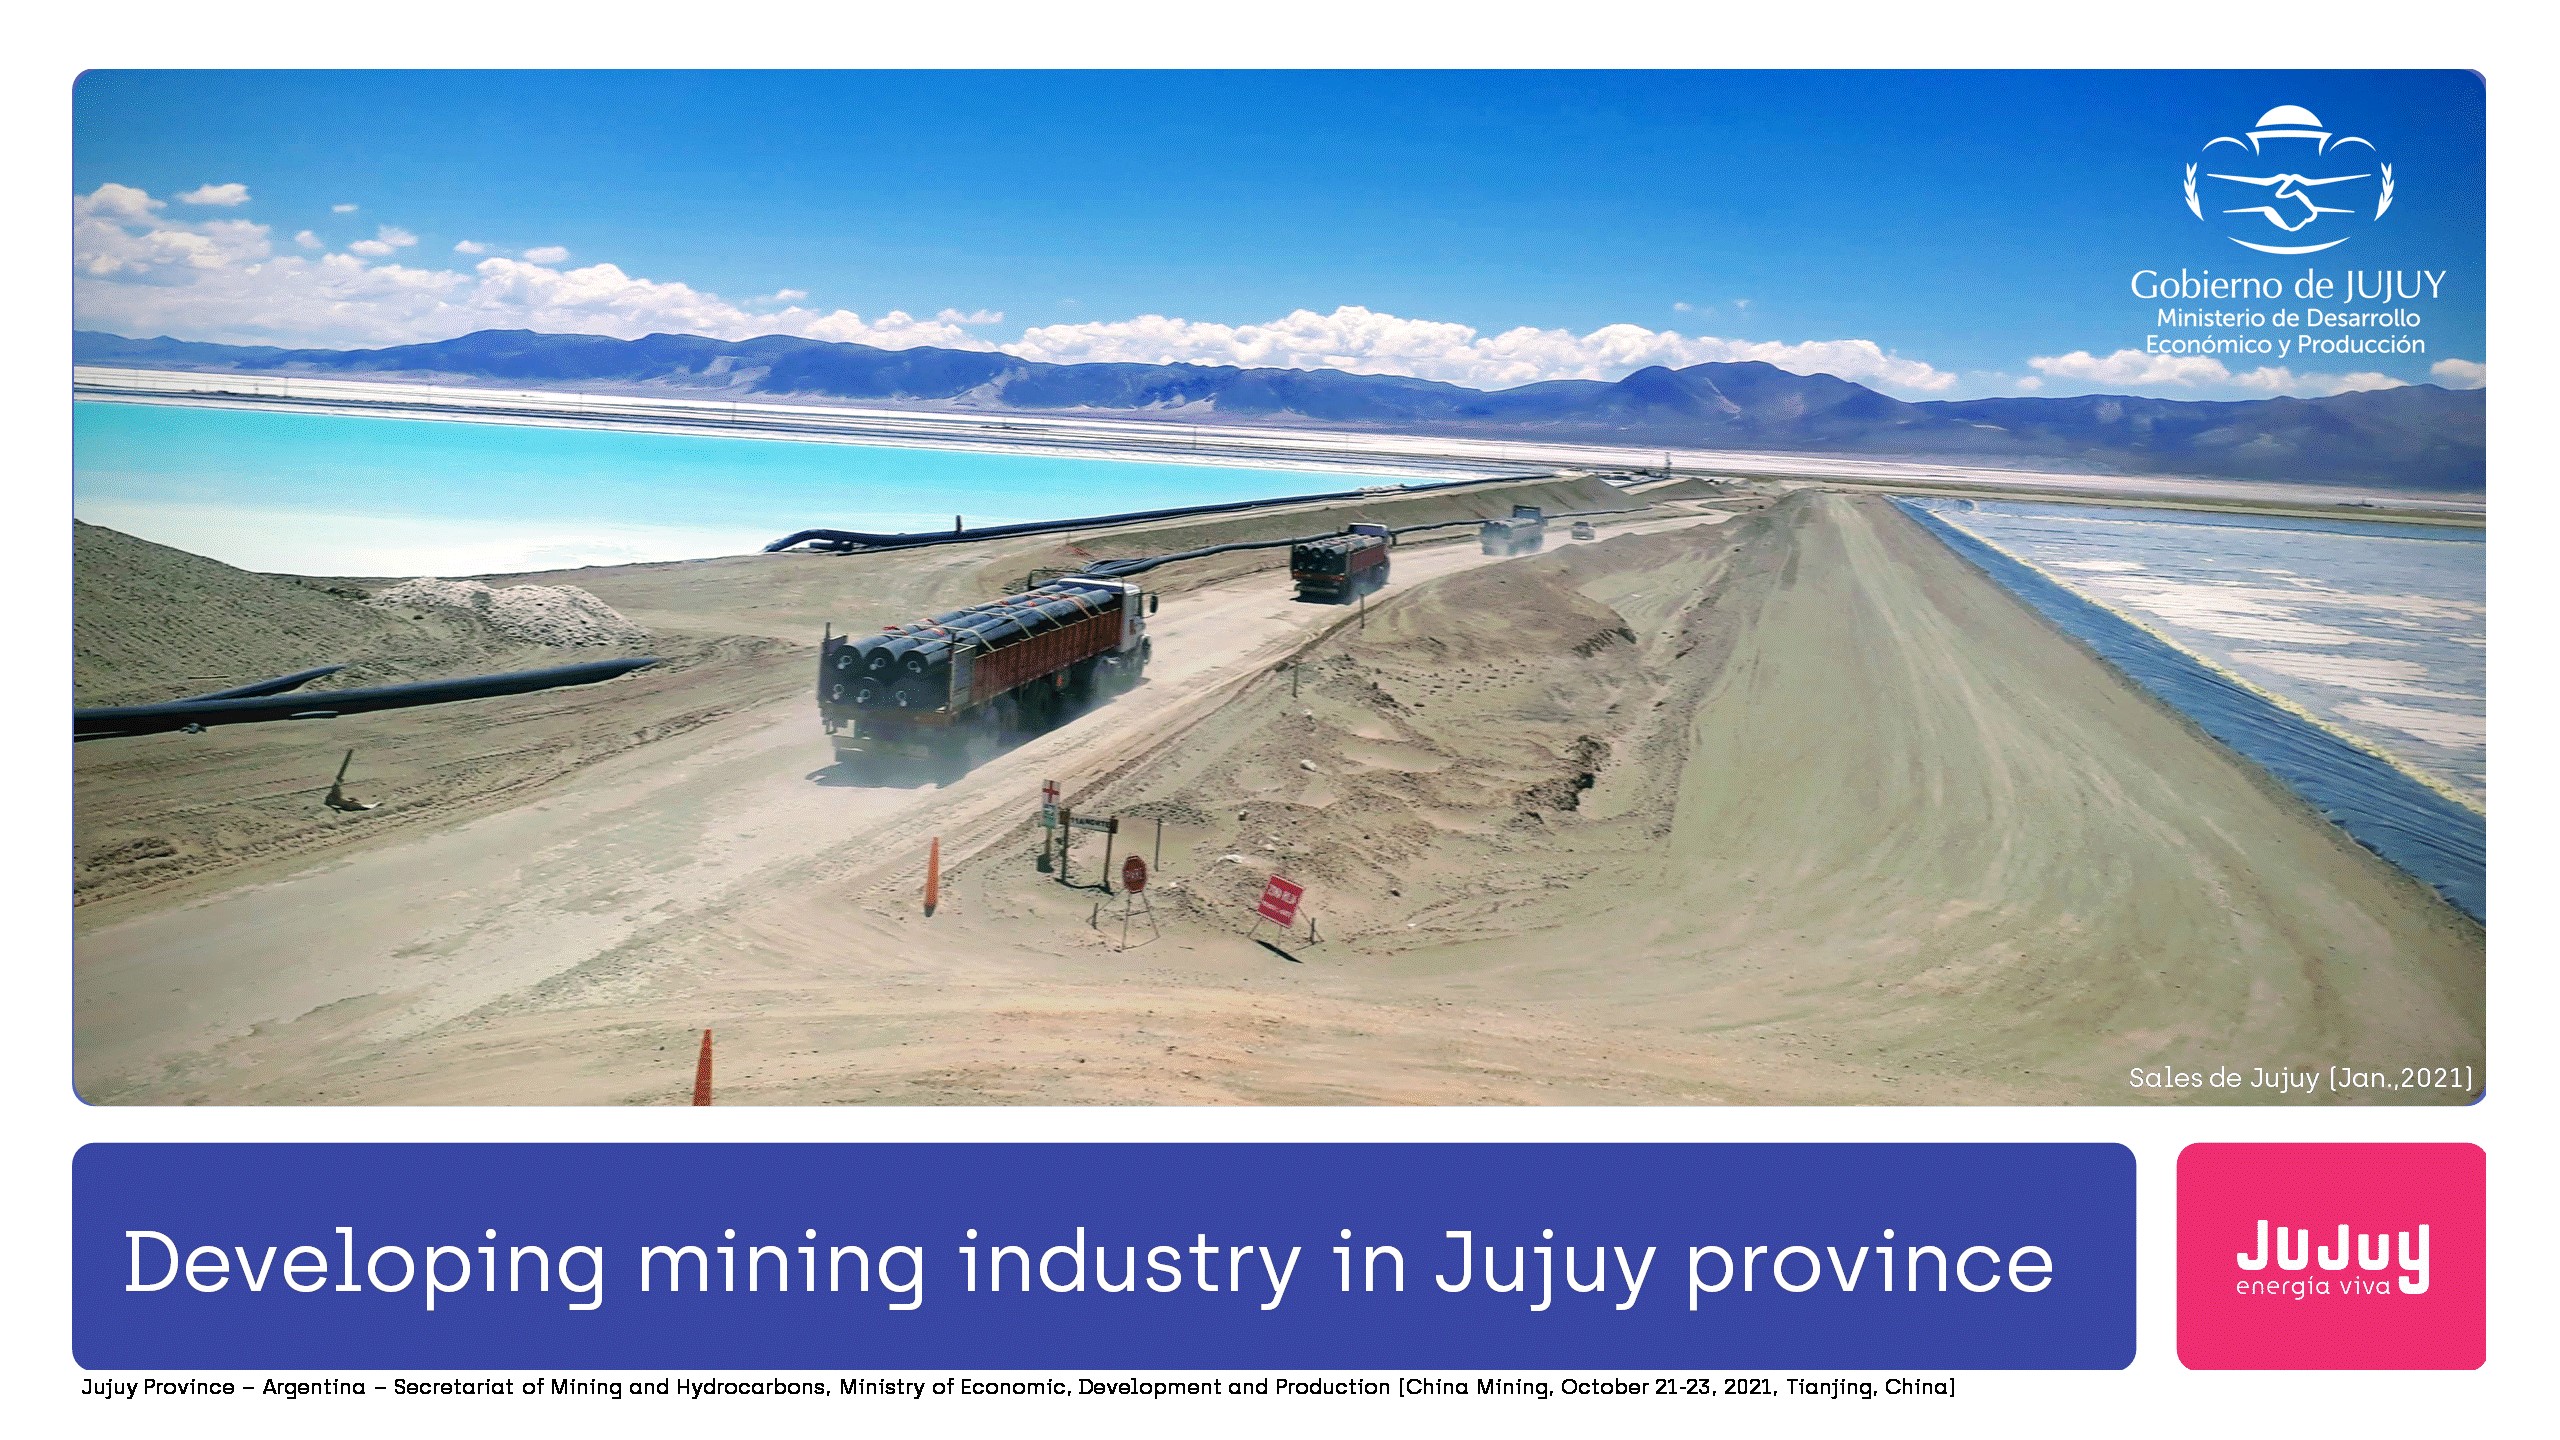 Mining in Jujuy